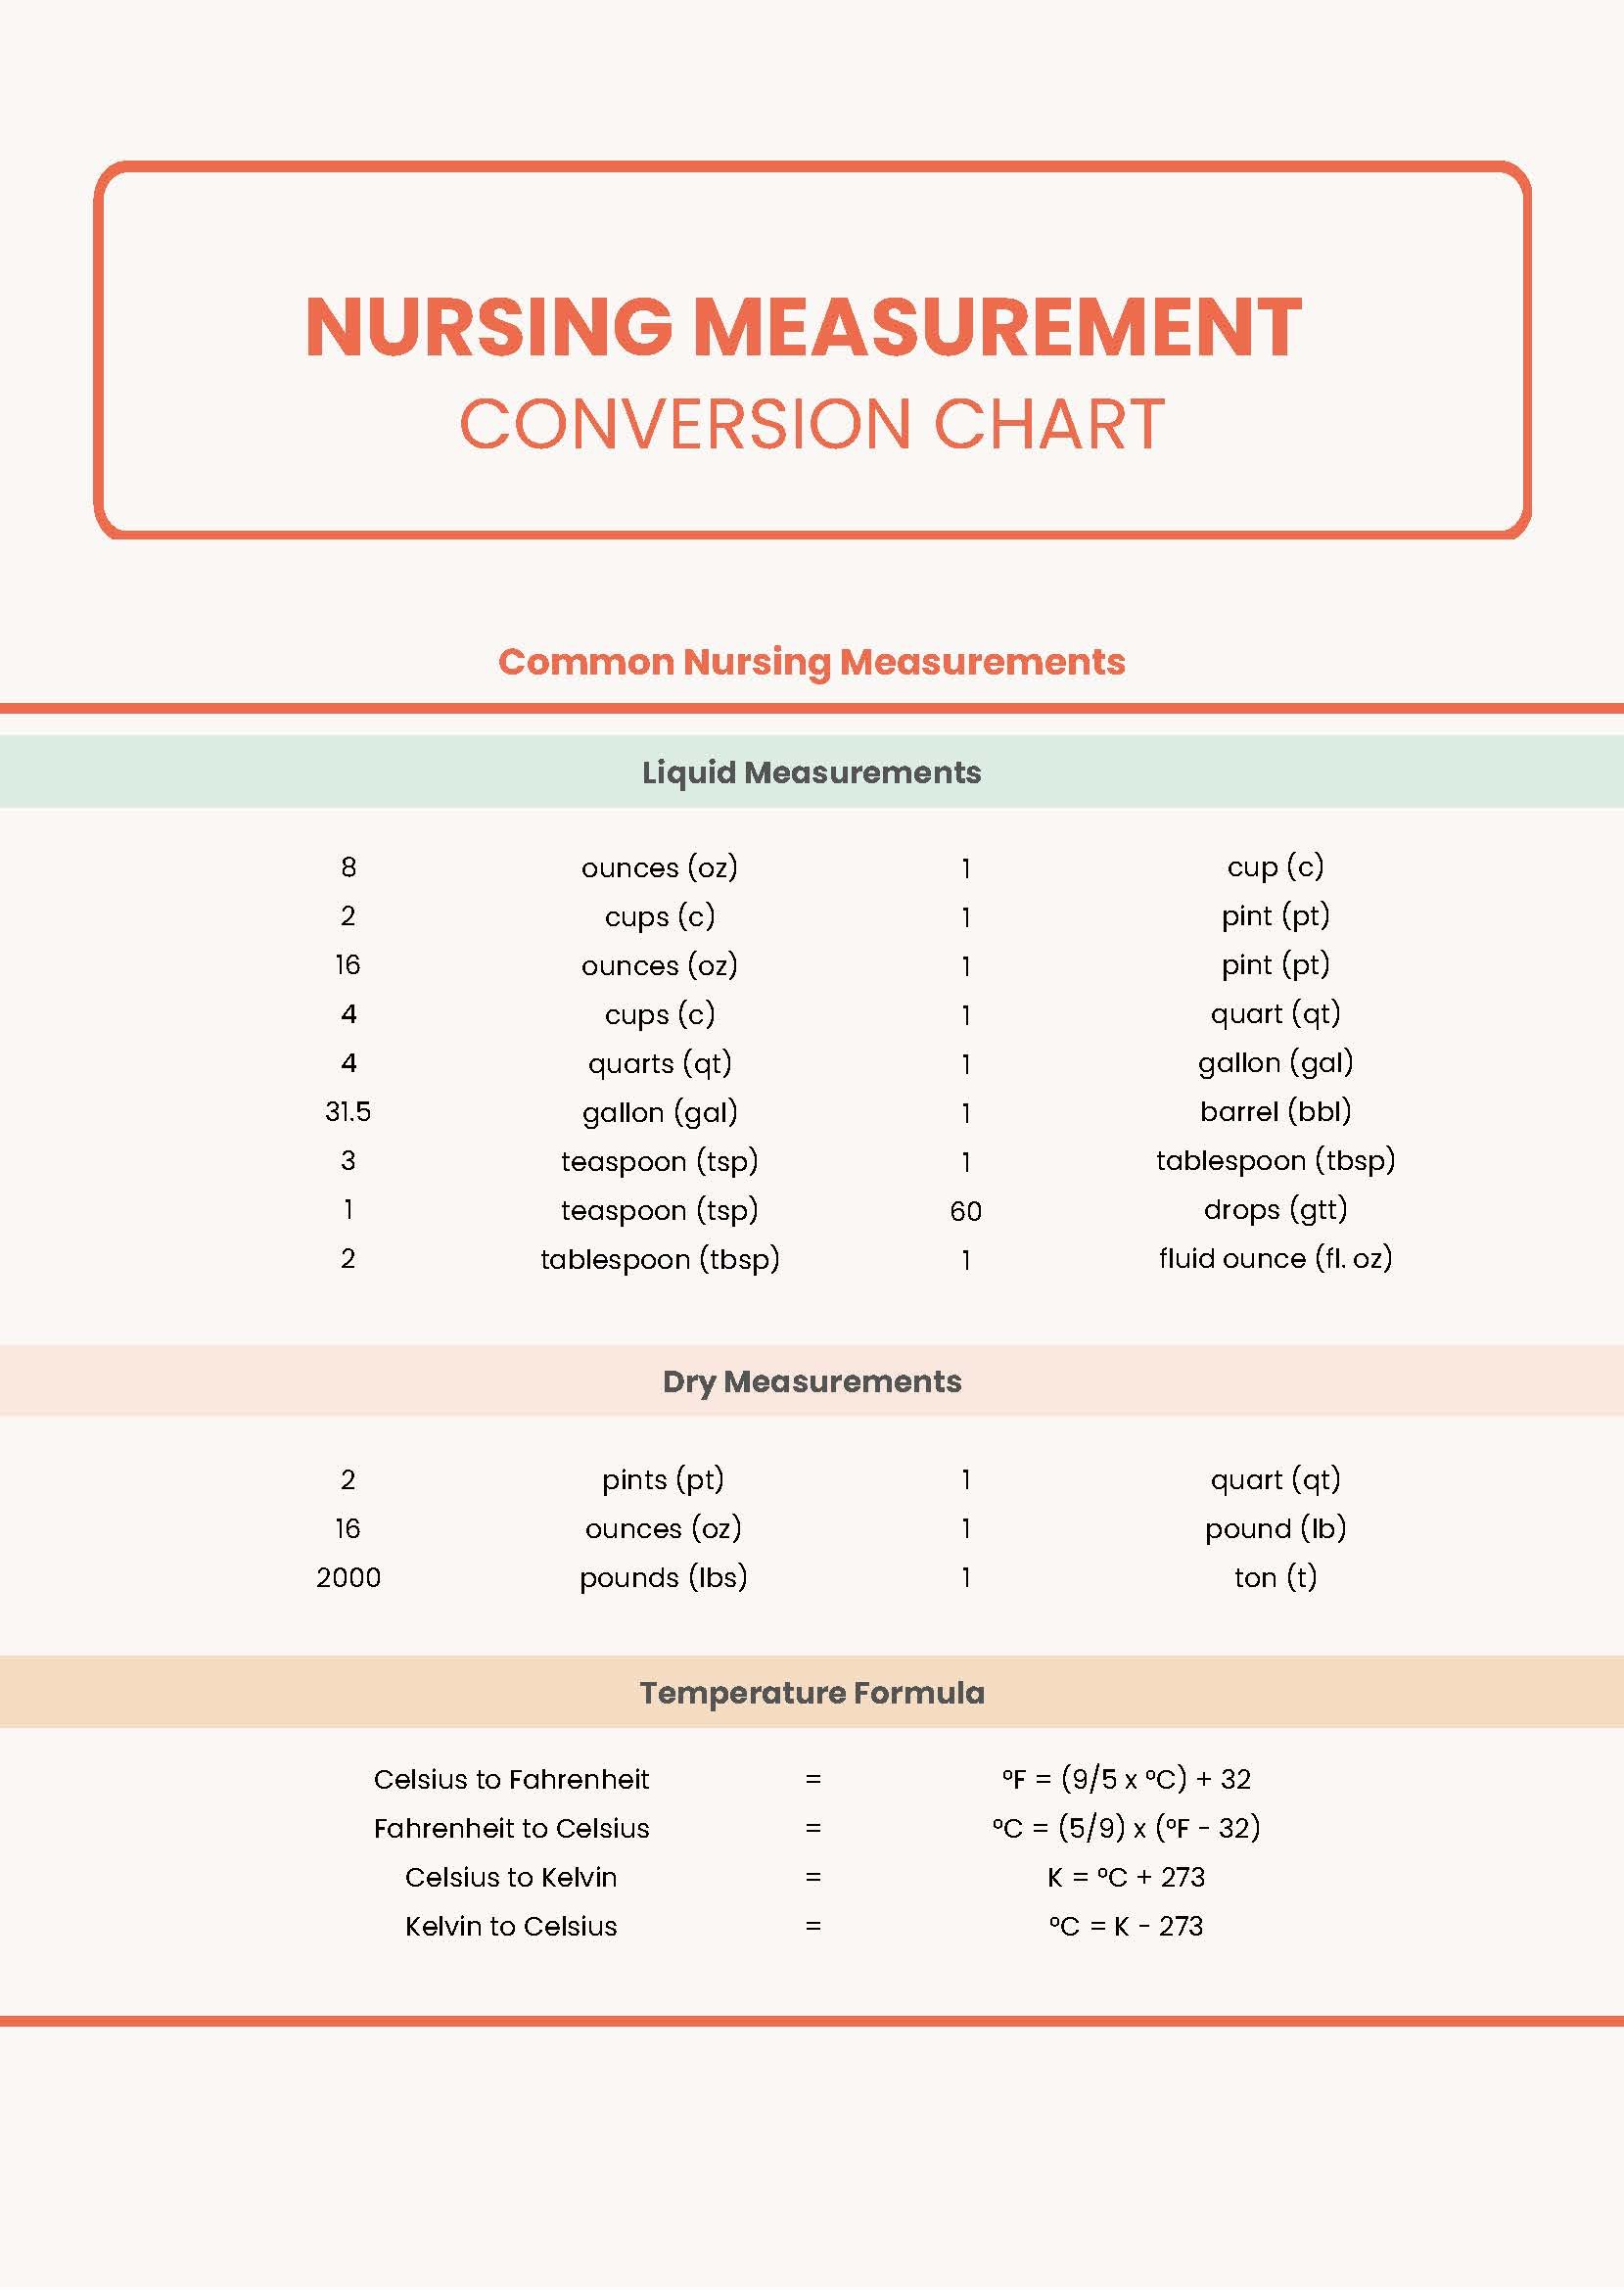 Nursing Measurement Conversion Chart in PDF